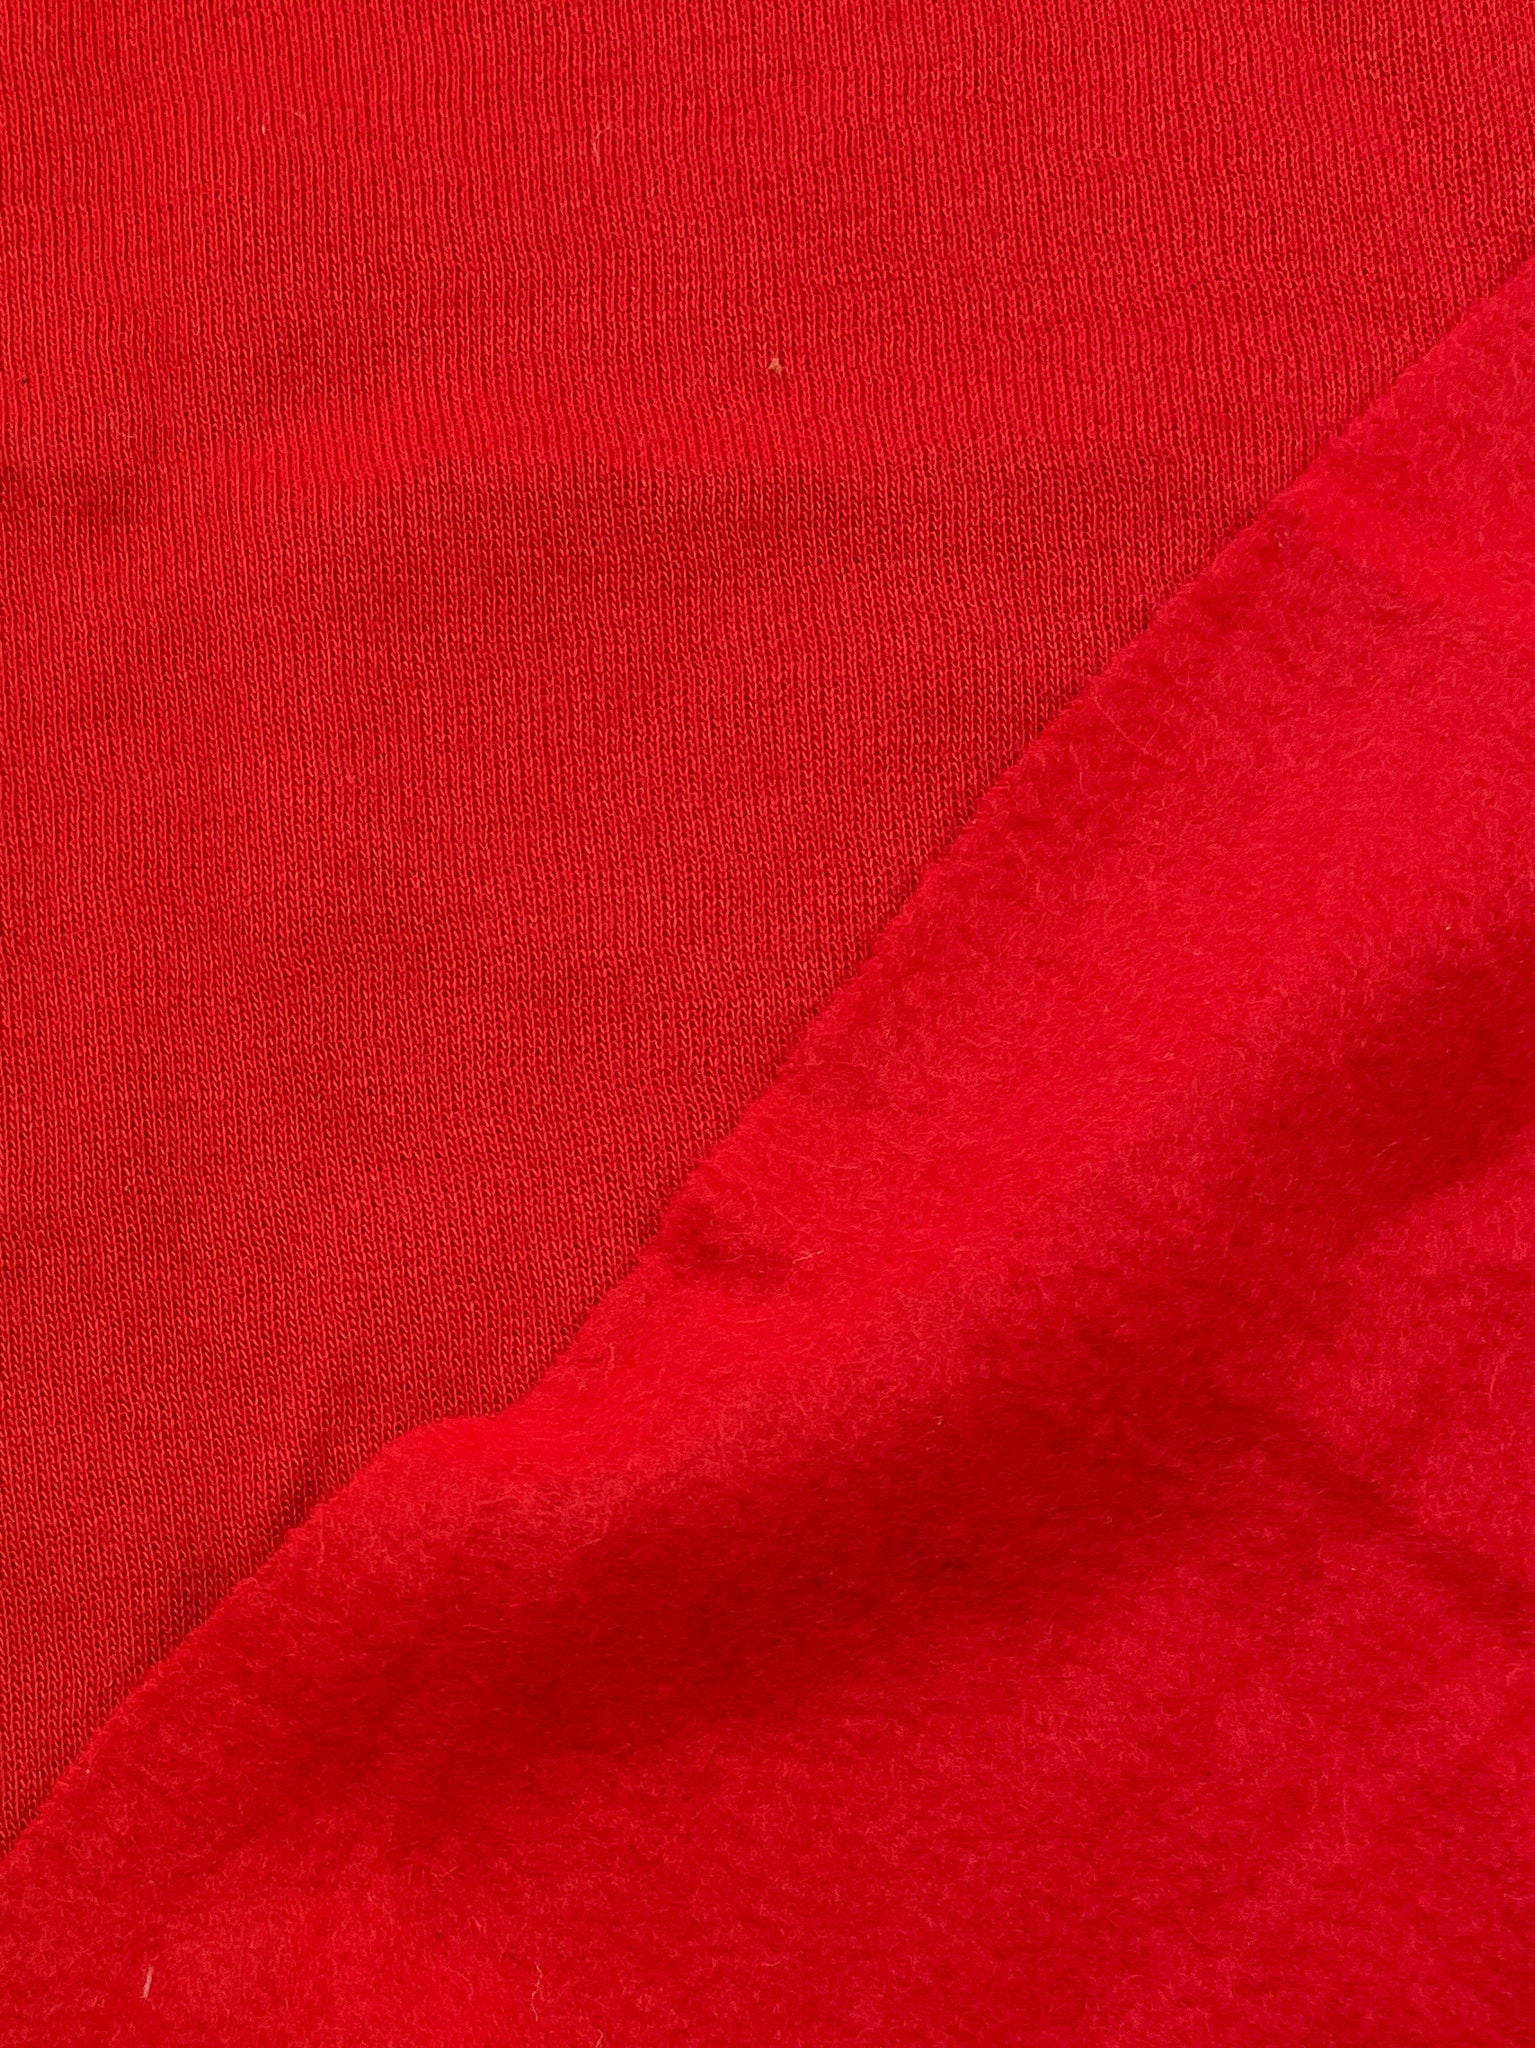 3/4 YD Poly Knit Sweatshirt Fleece - Red